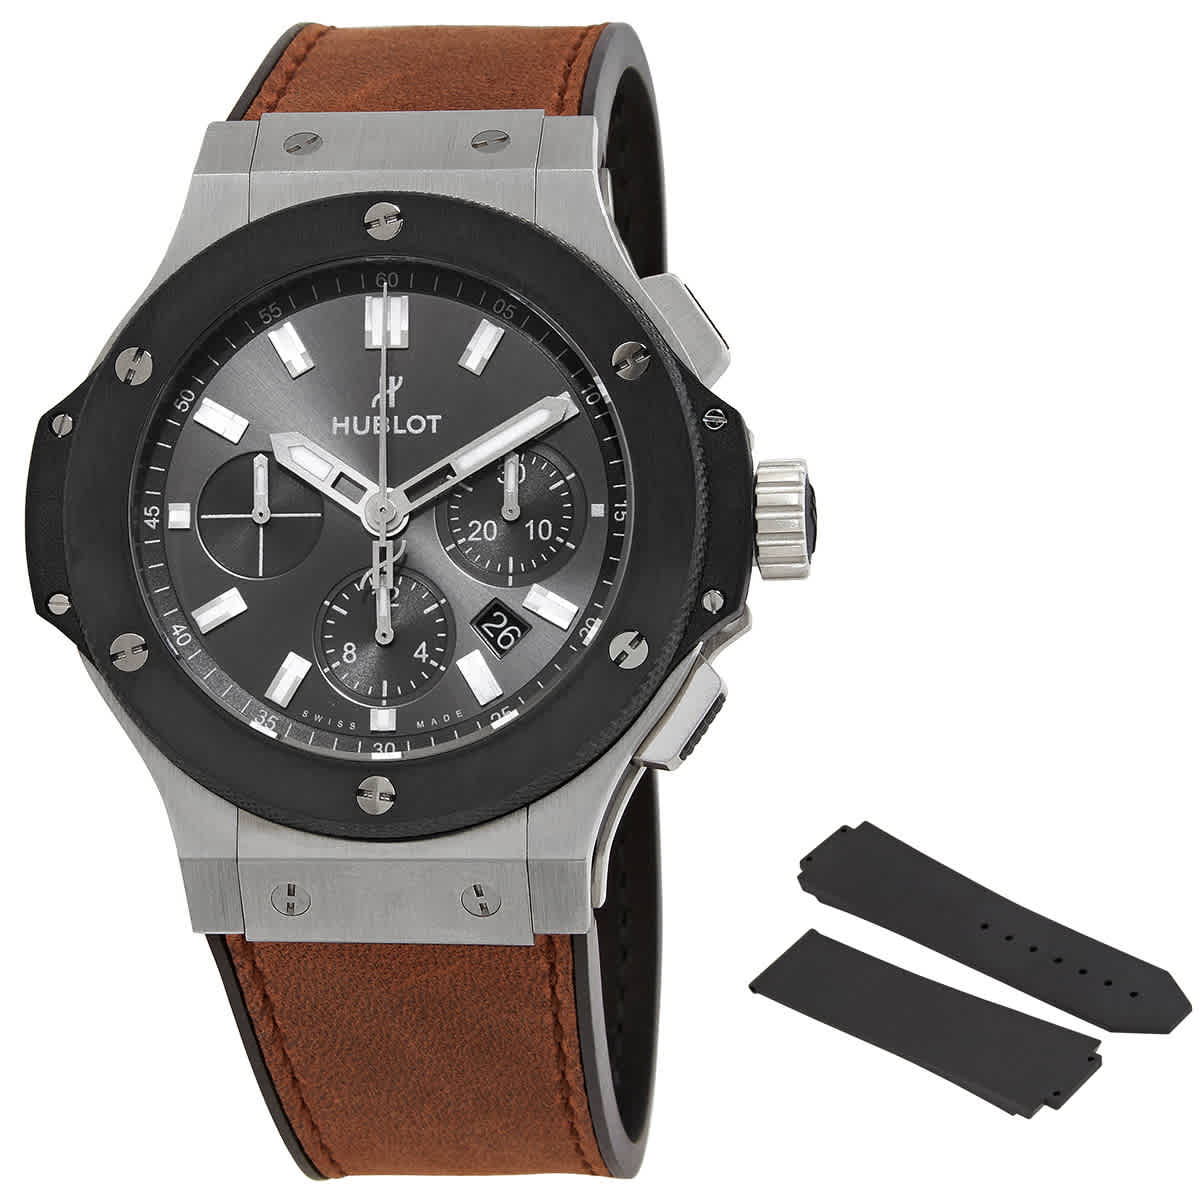 Hublot launches new watch Big Bang All Black Zermatt